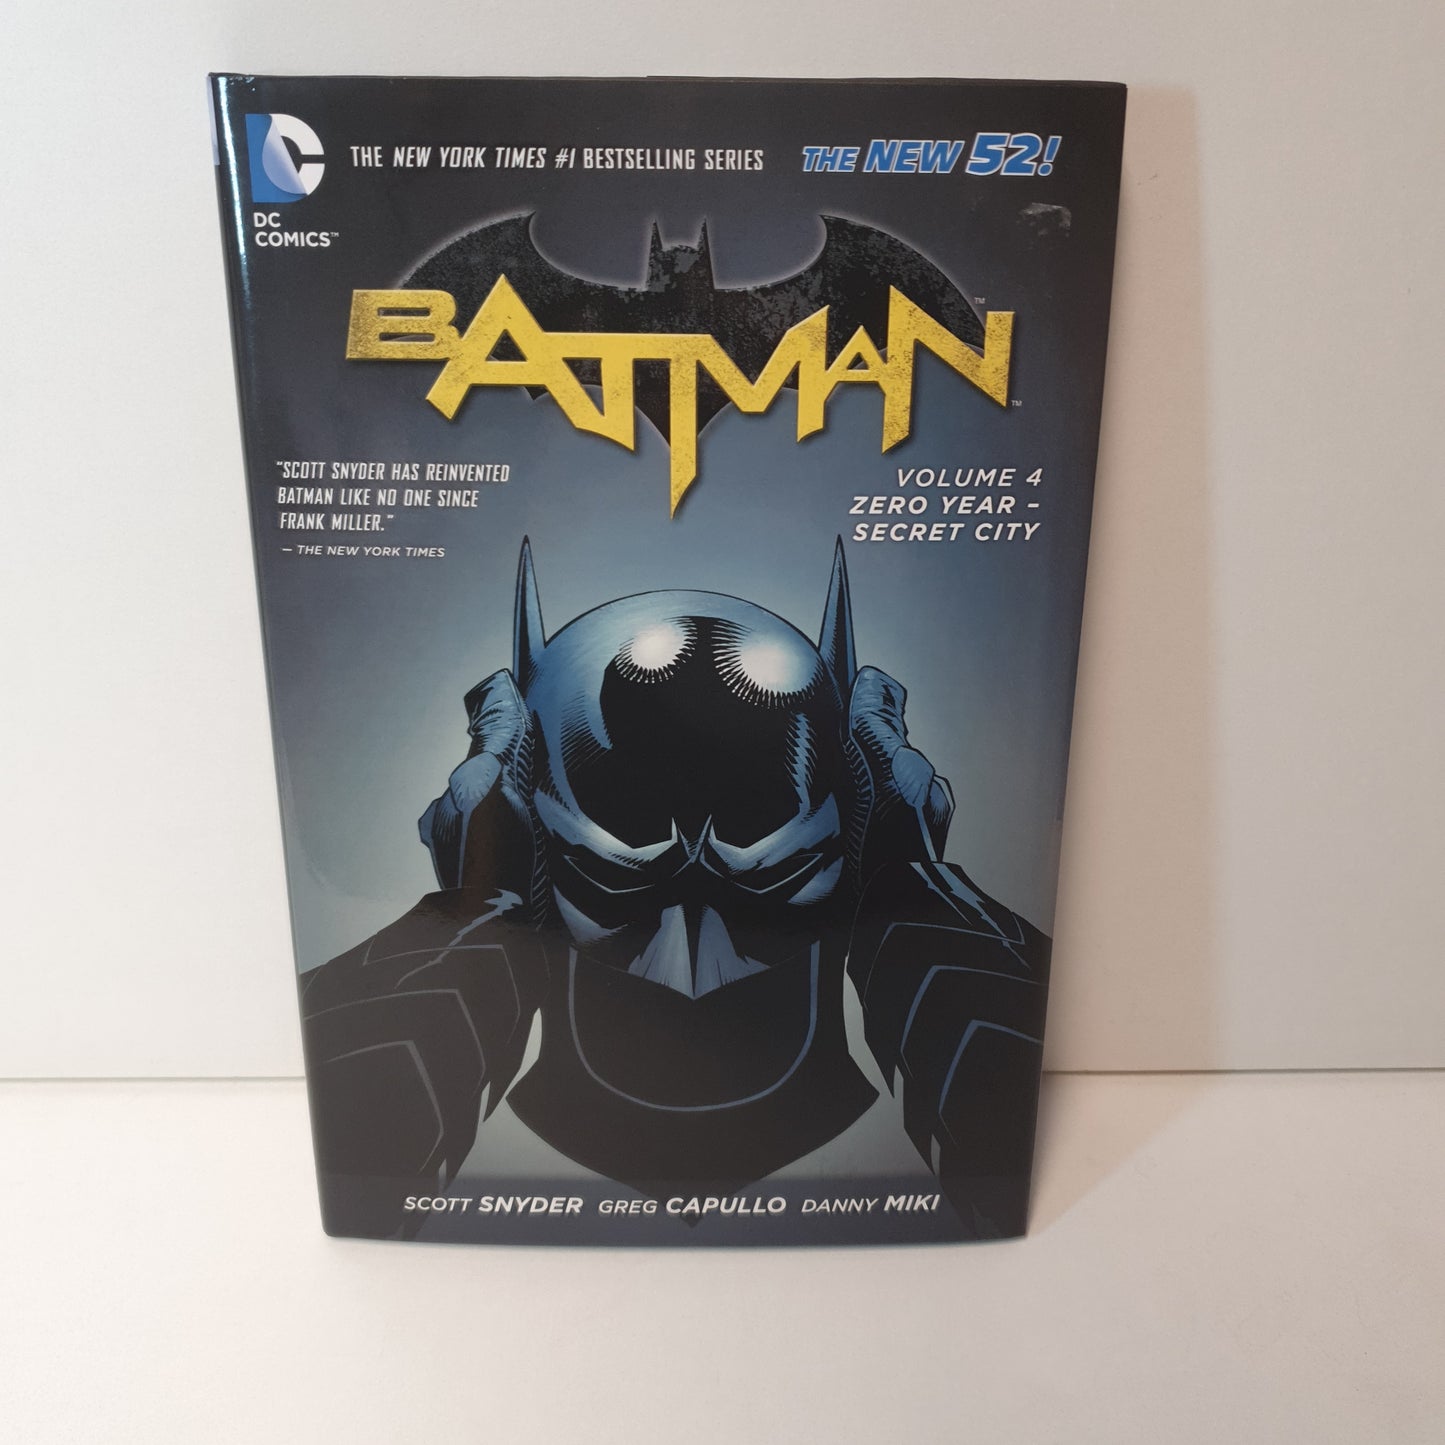 Batman Vol 4 Zero Year - Secret City by Snyder, Capullo & Miki (2014)